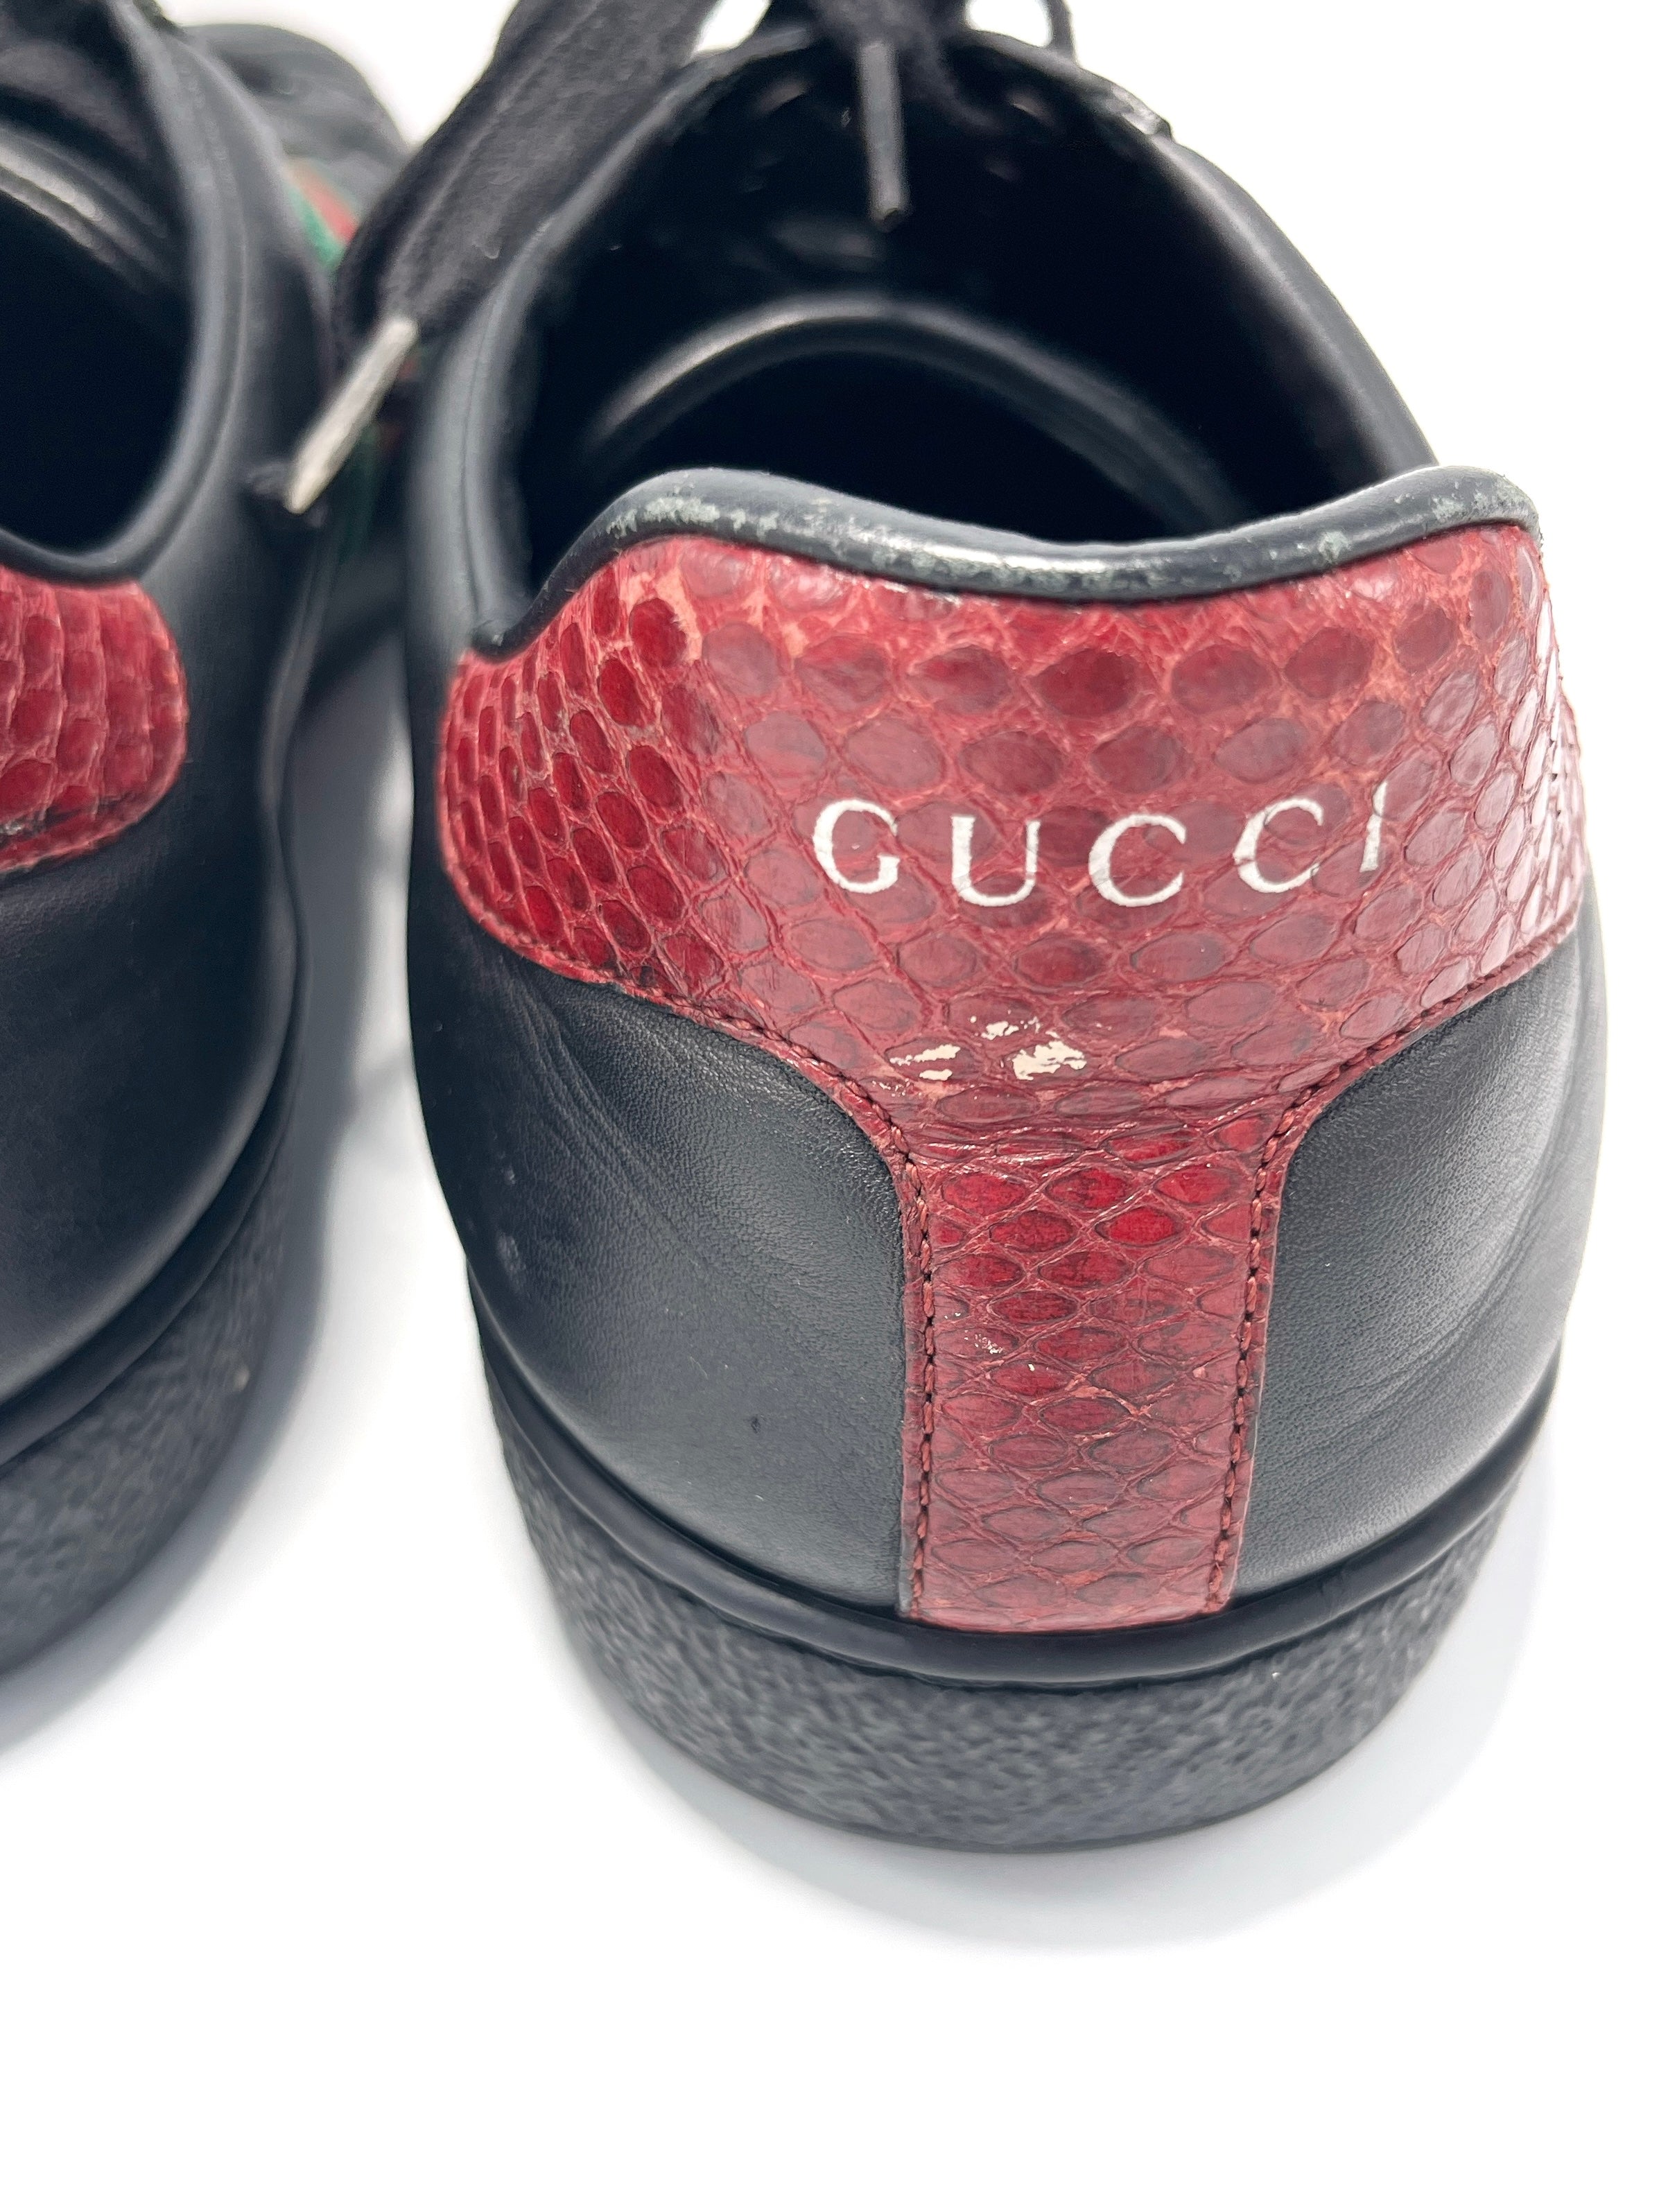 Champion Gucci Ace Sneaker (US 11 masc)